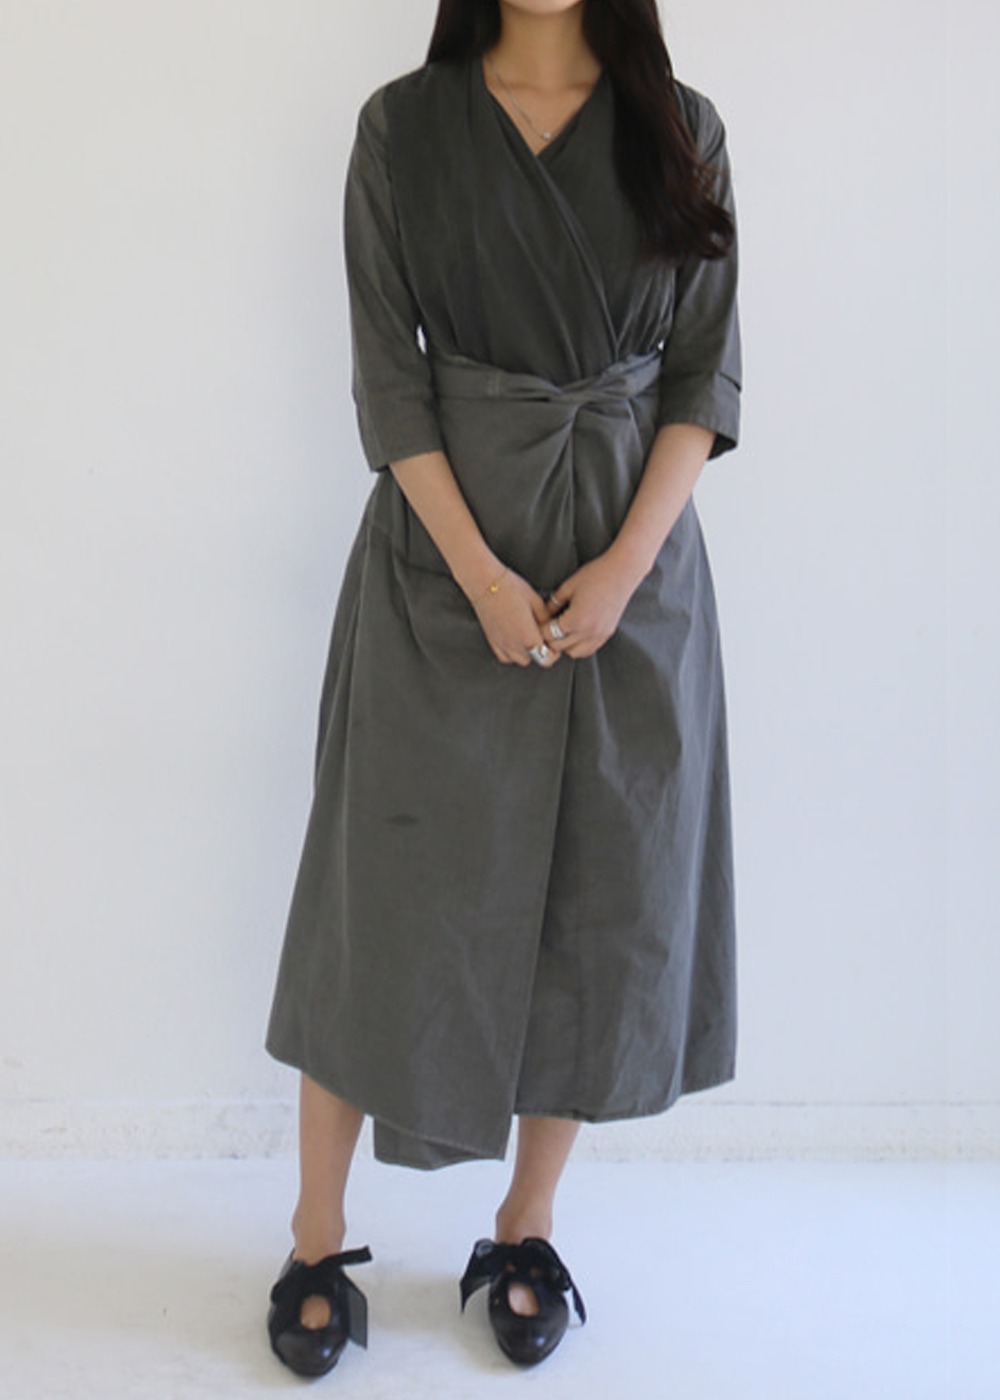 Umi Hagoromo Organic Cotton Wrapped Dress